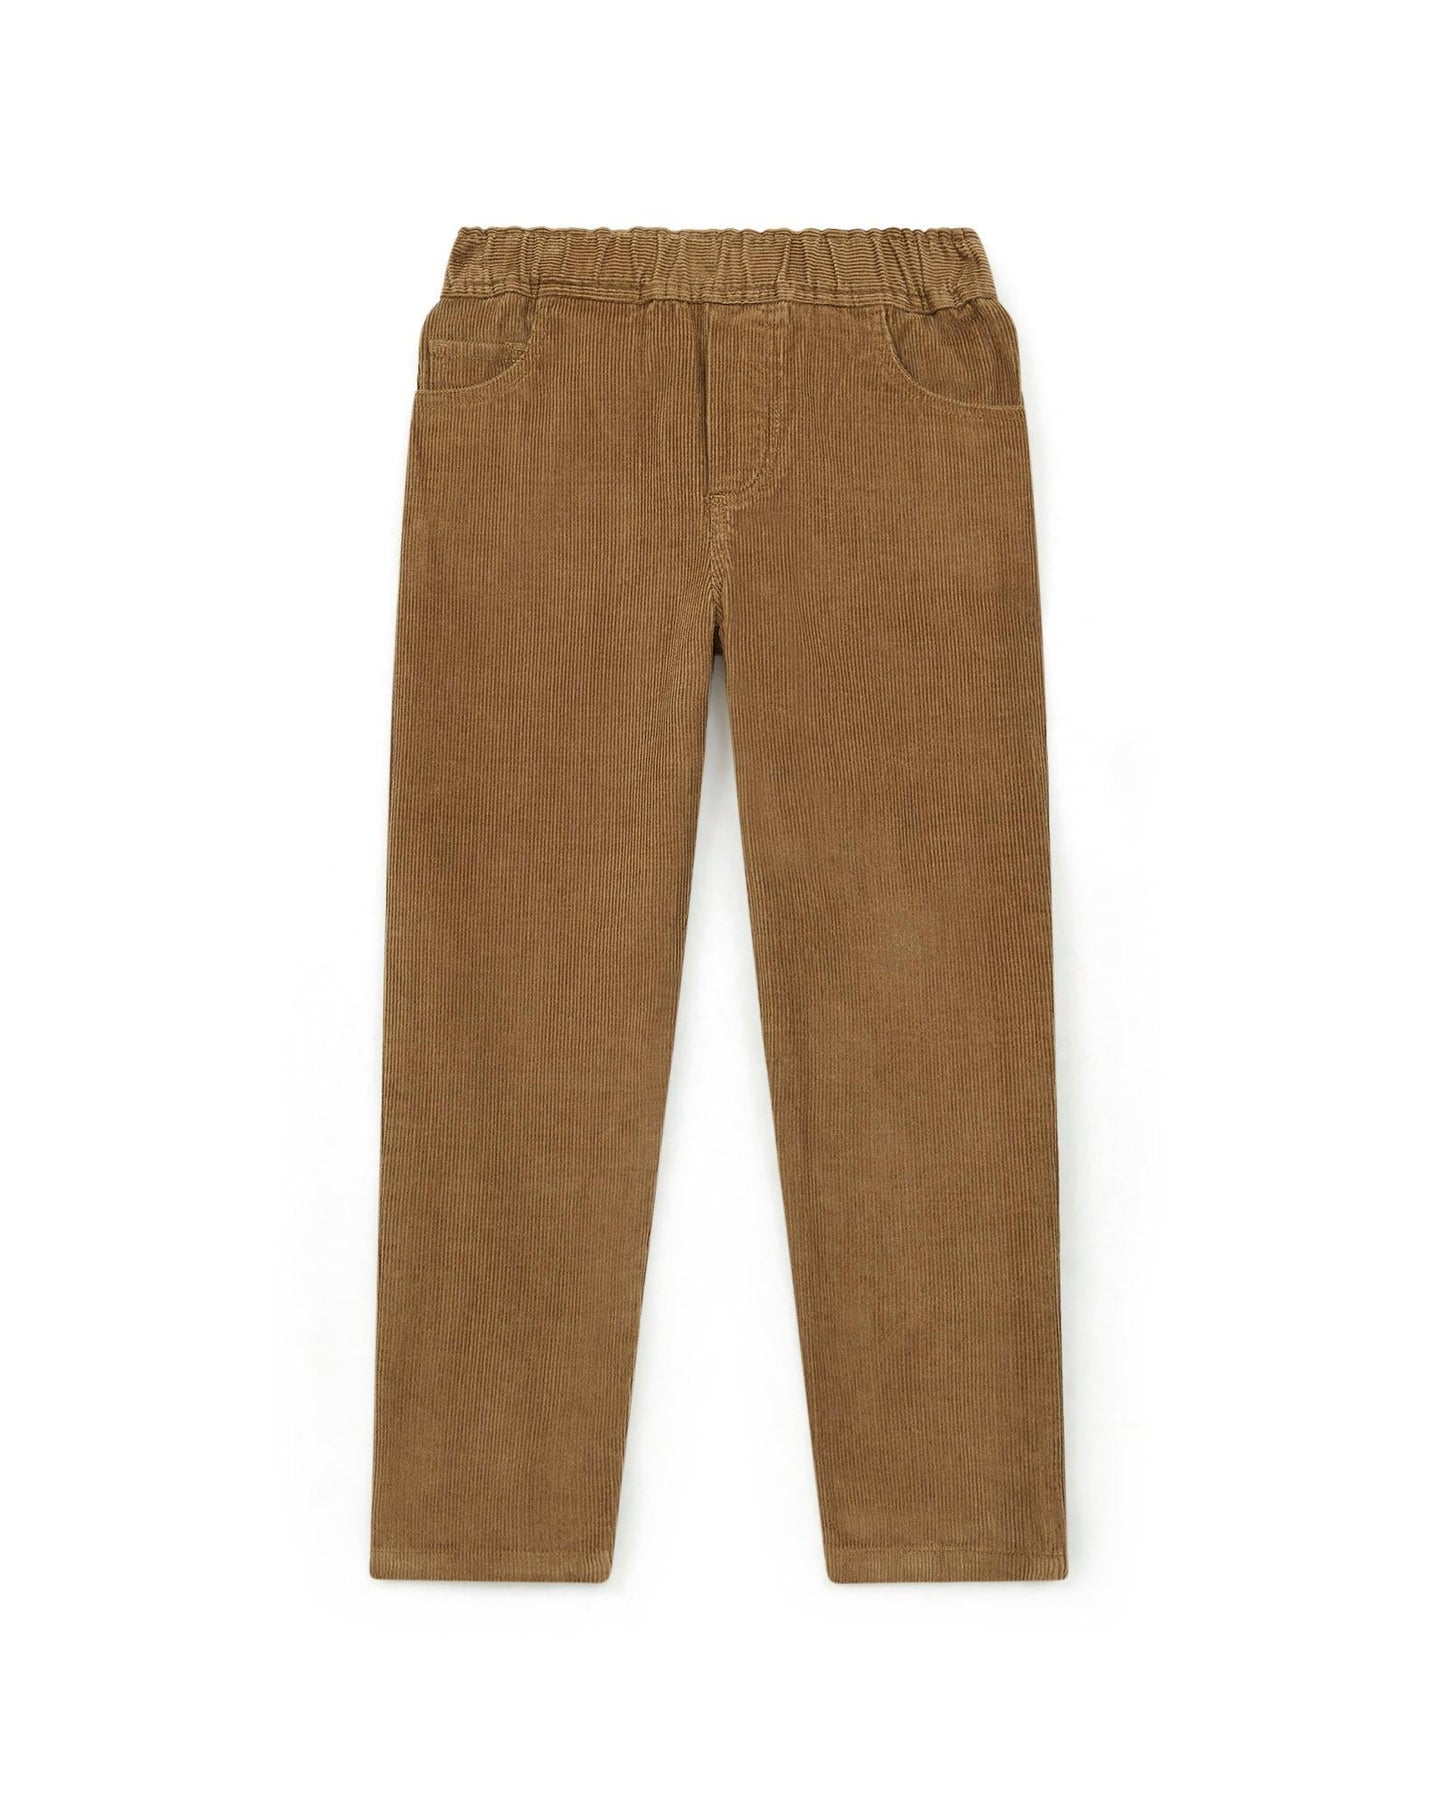 Pantalon - Fraca marron en velours côtelé